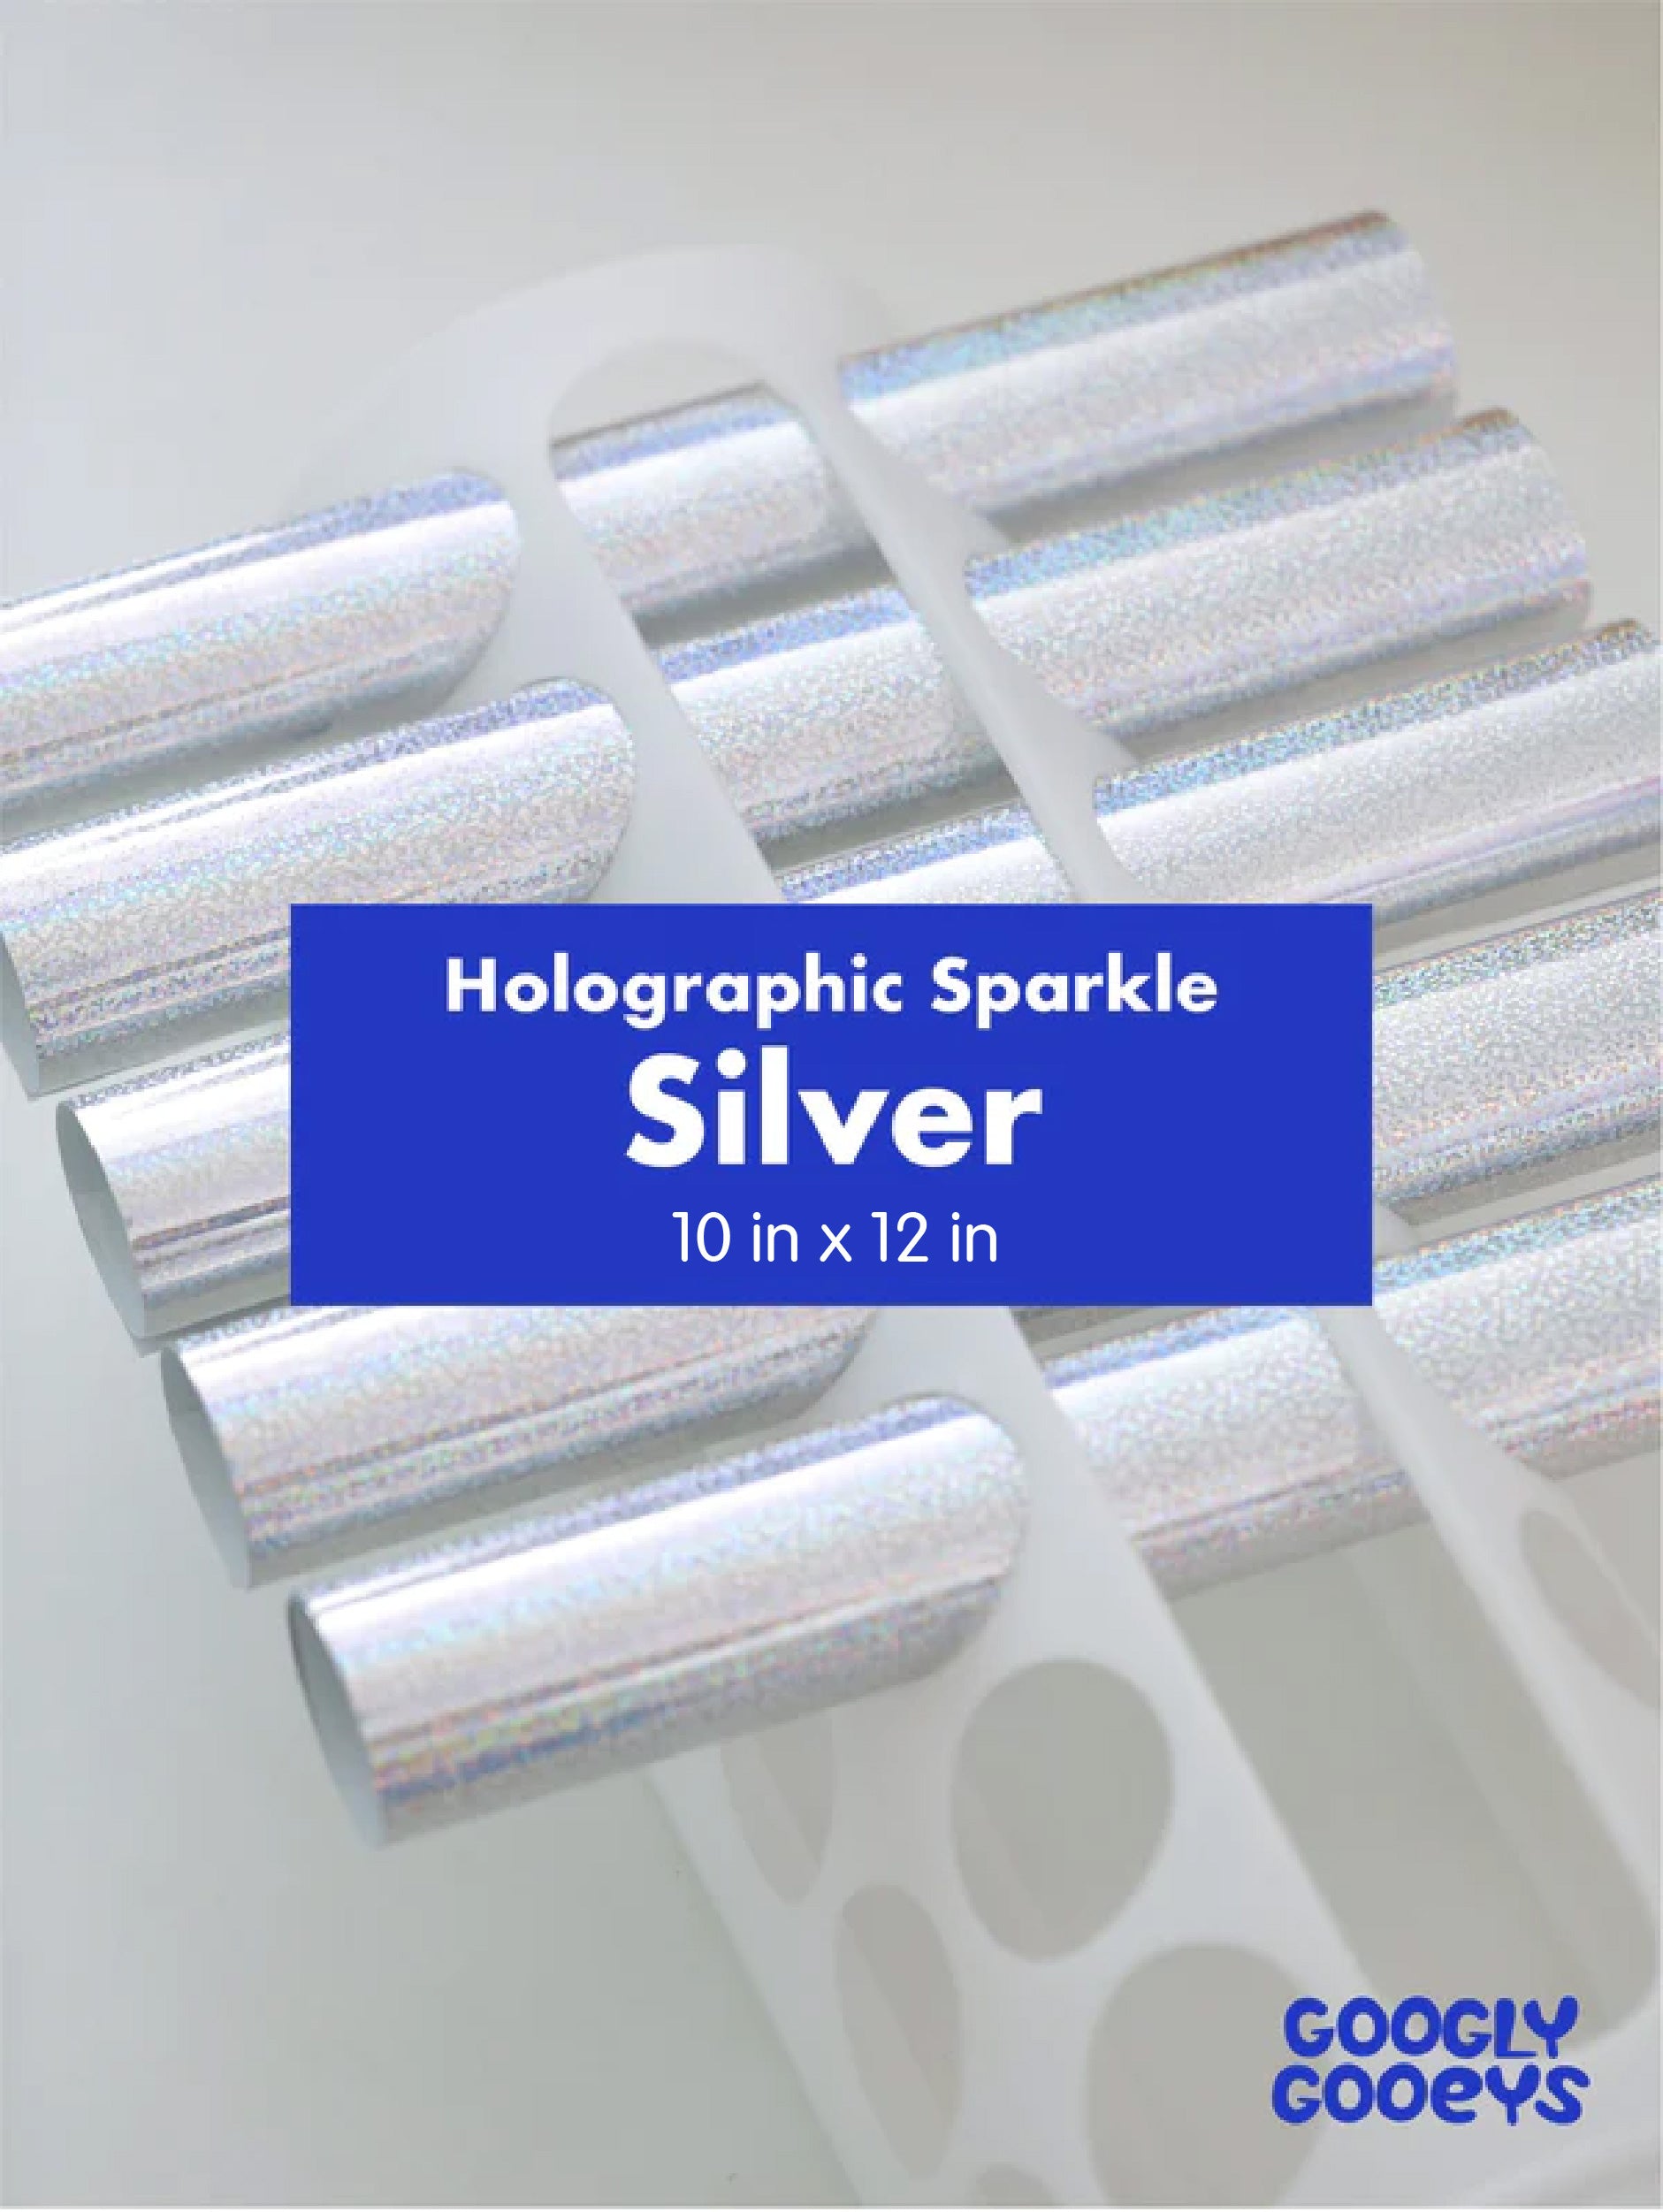 Teckwrap Holographic Sparkle Adhesive Vinyl Stickers